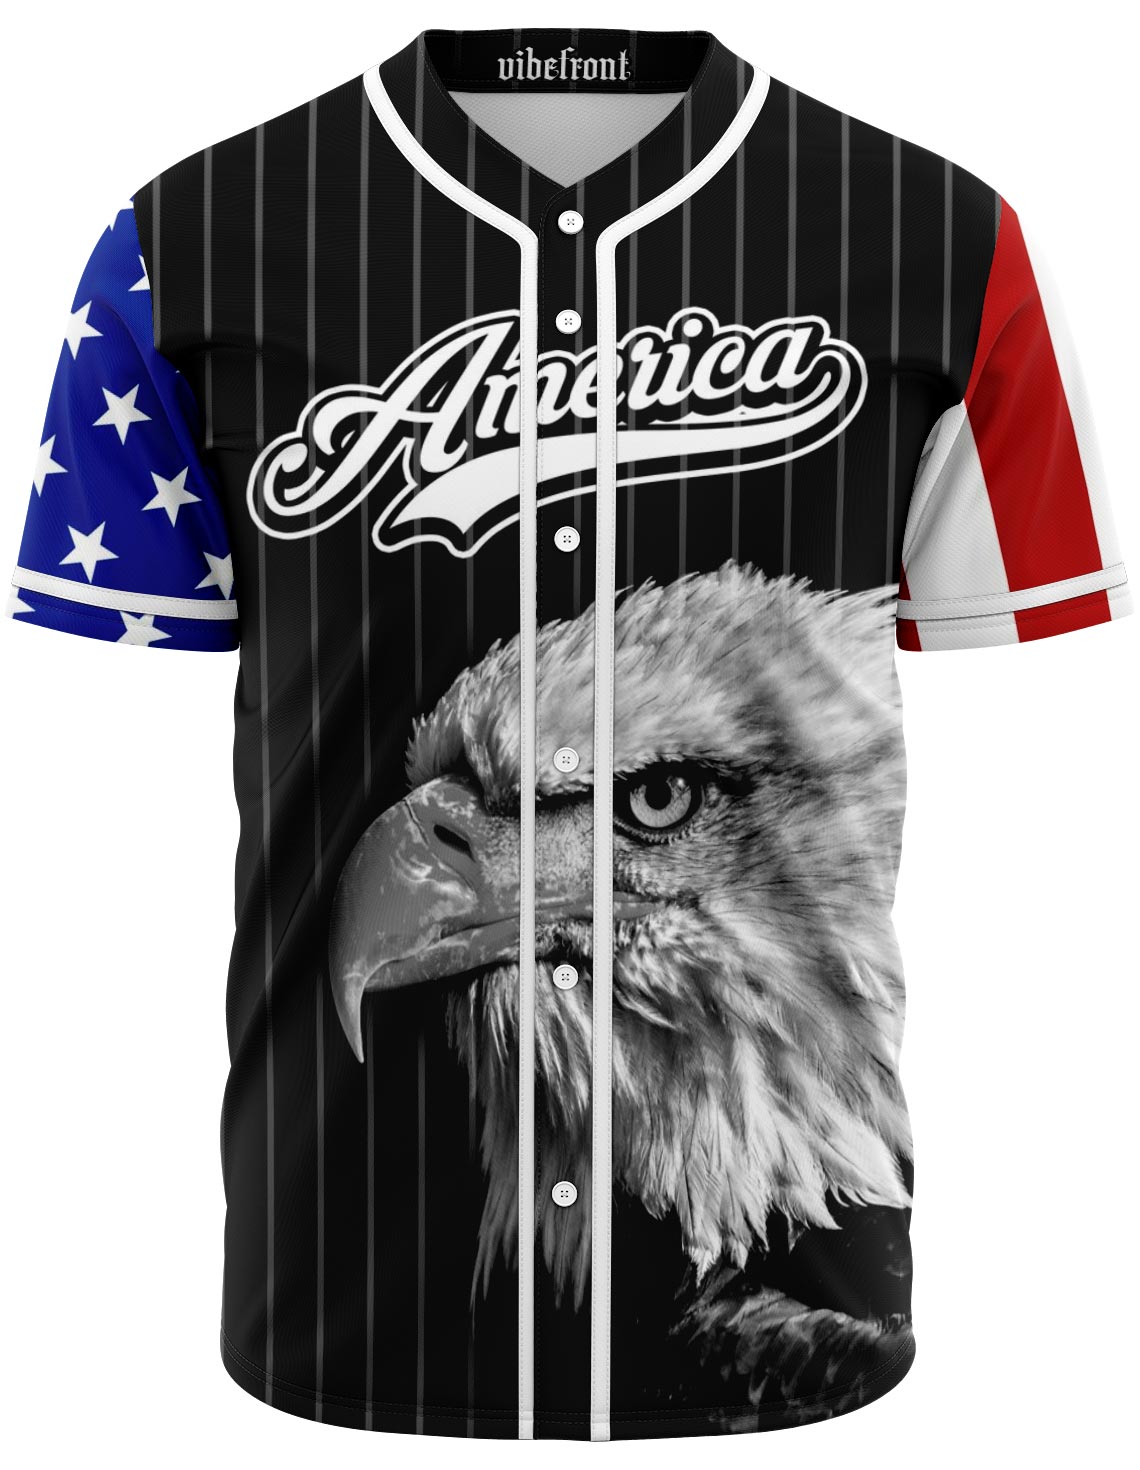 patriotic baseball jersey